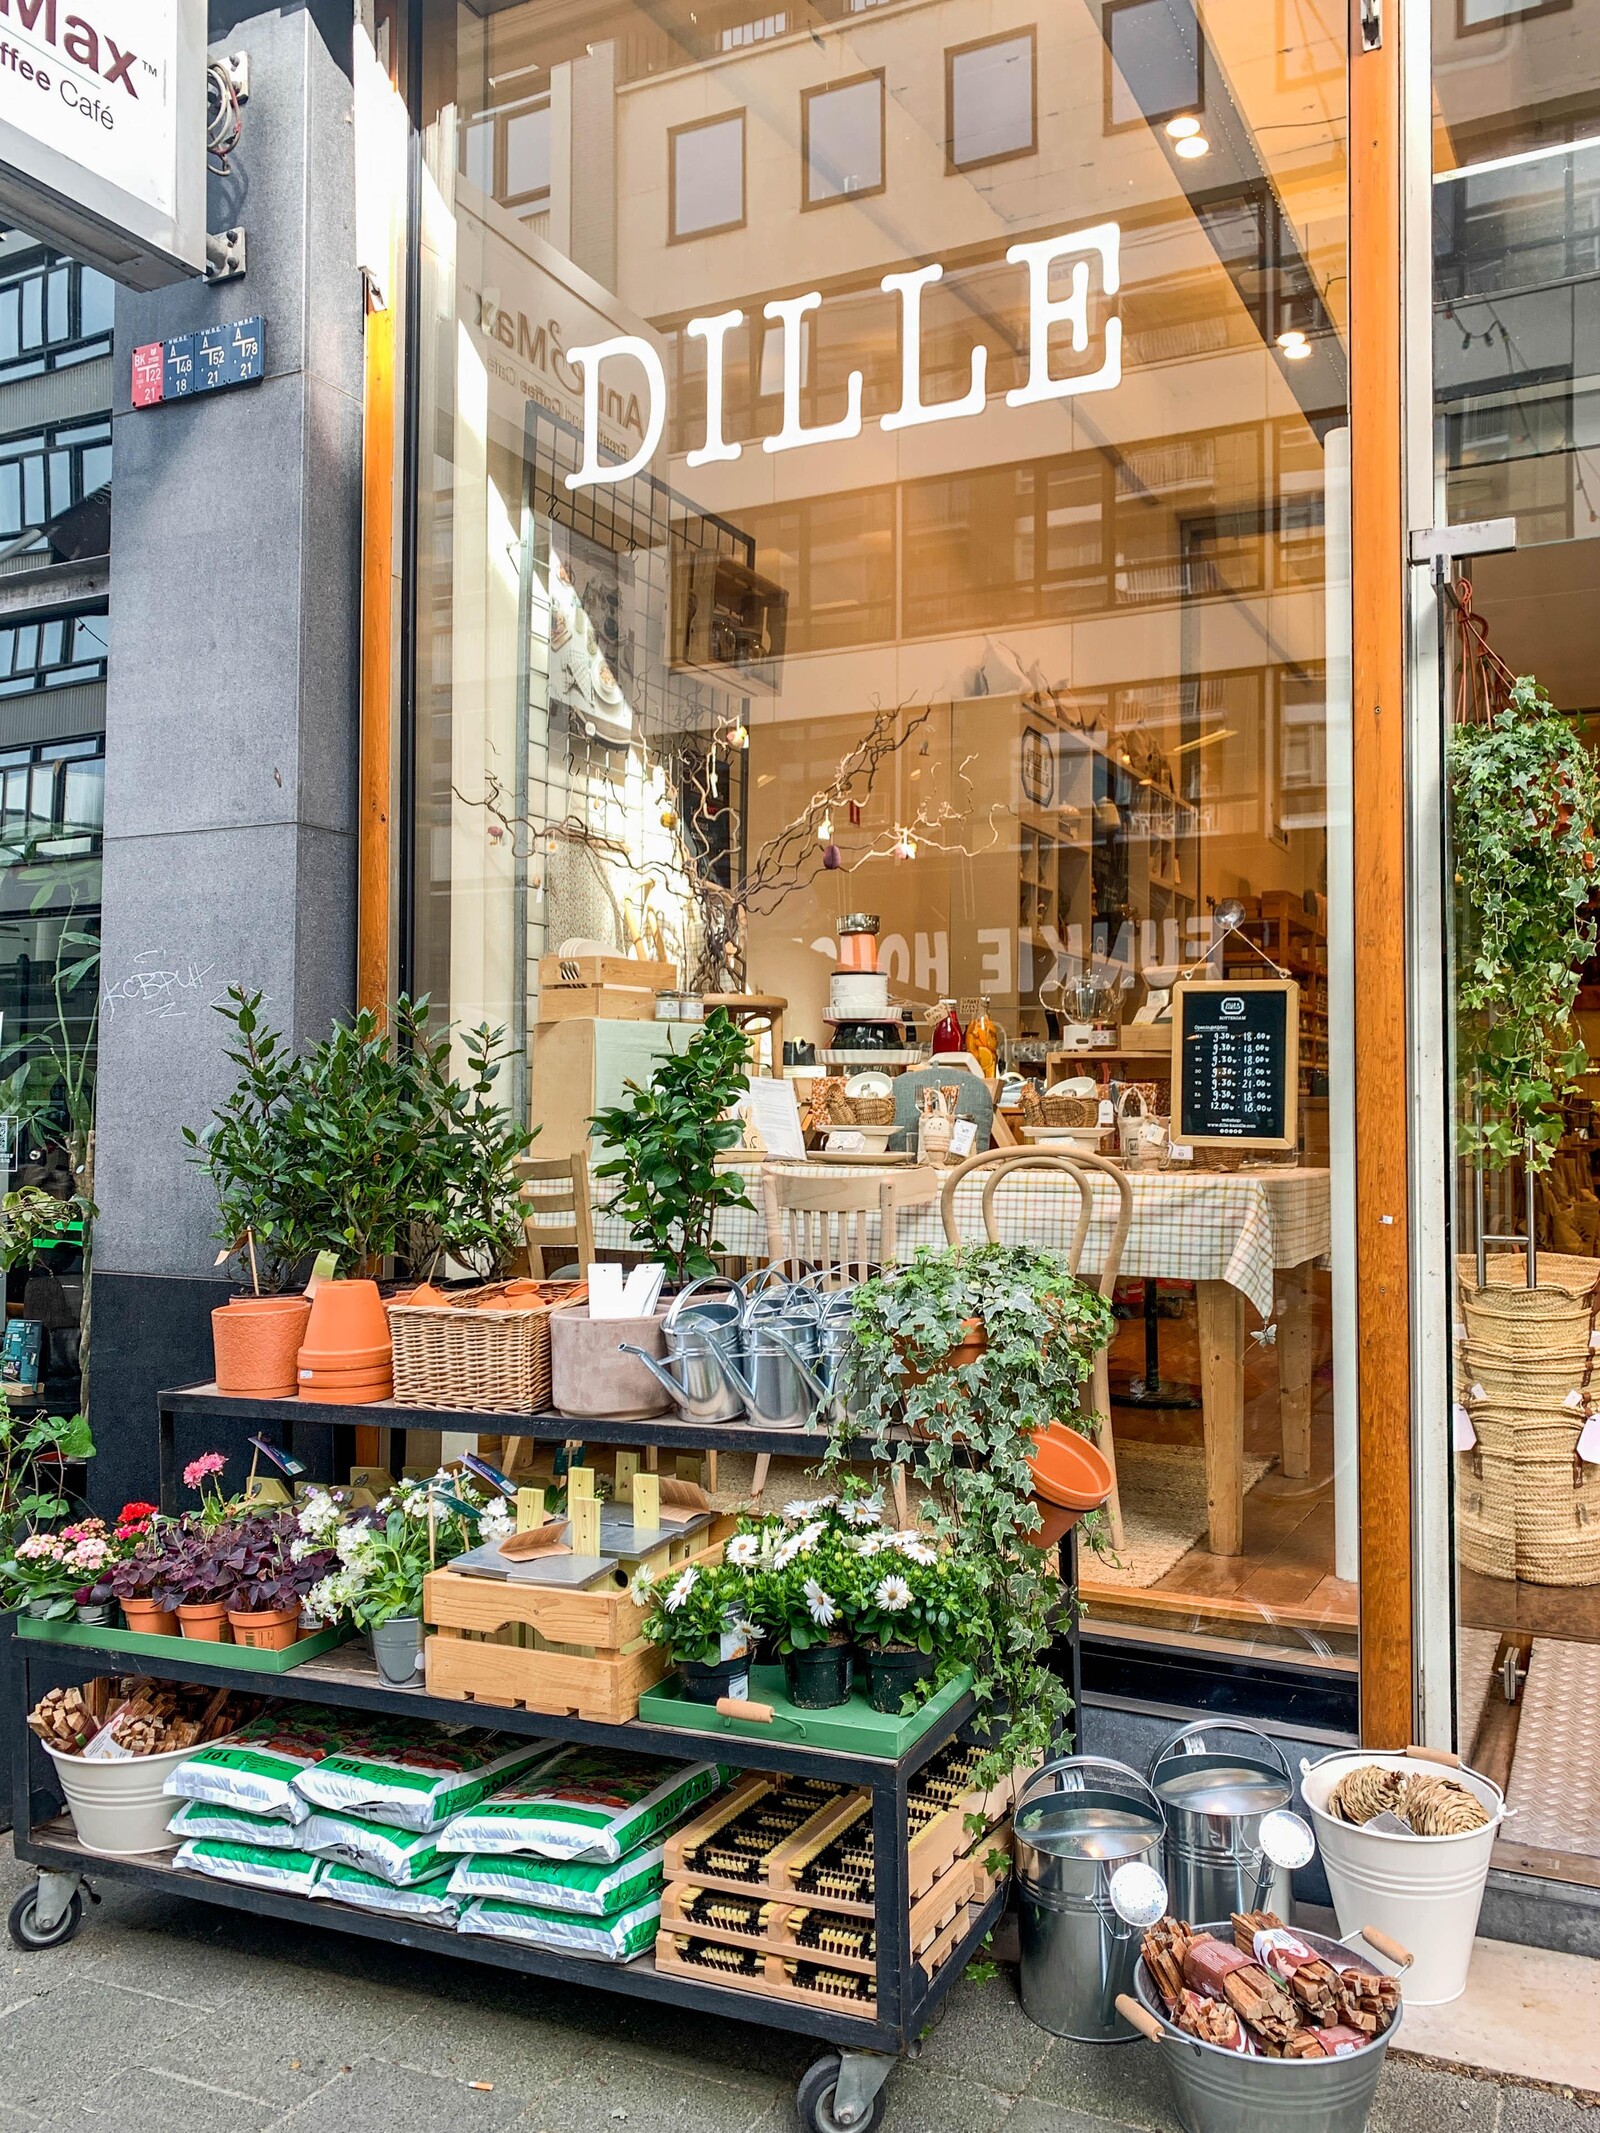 Dille Kamillie winkel lente Rotterdam Centrum